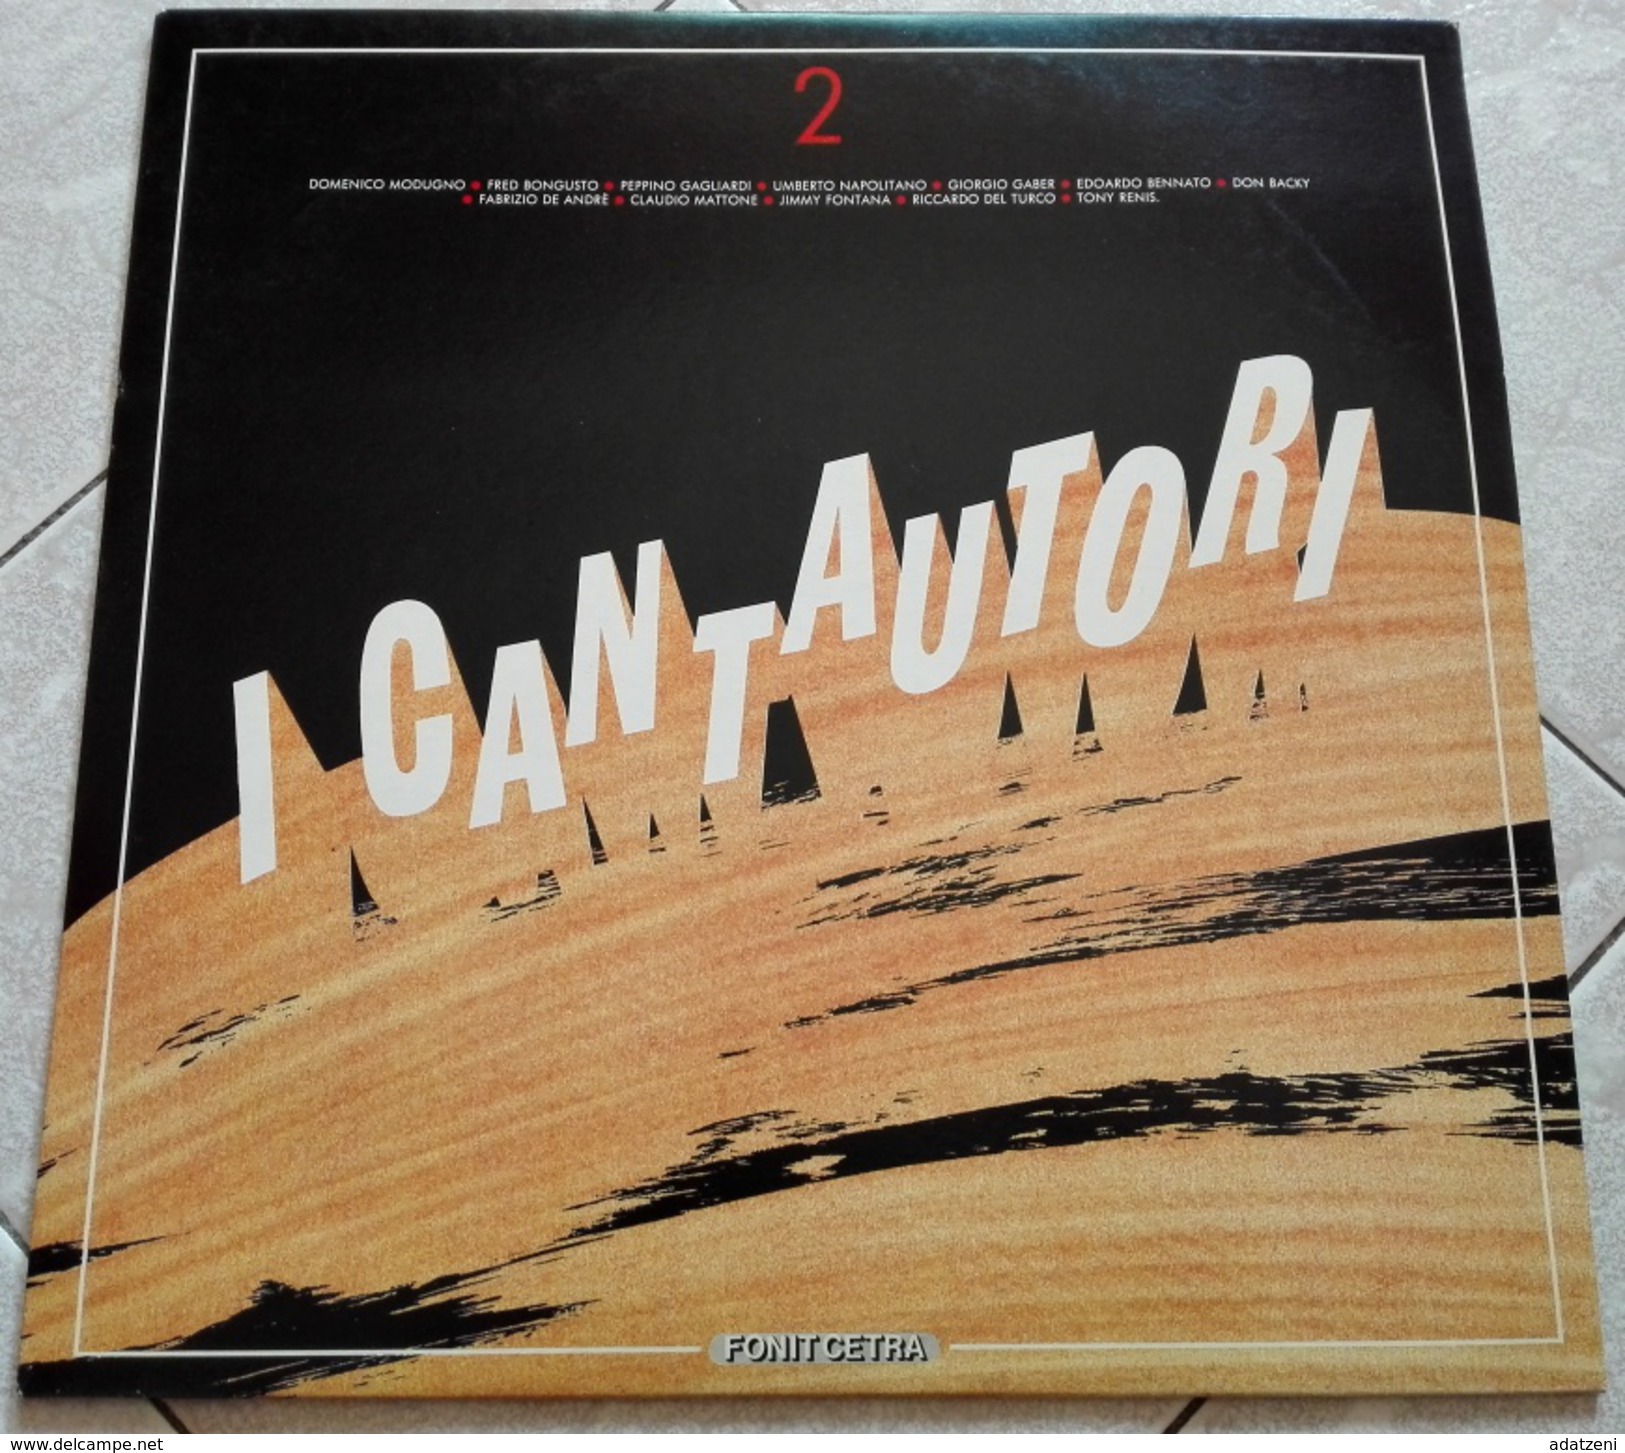 ARTISTI VARI  RACCOLTA I CANTAUTORI VOLUME 2 Disco LP 33 Giri - Sonstige - Italienische Musik